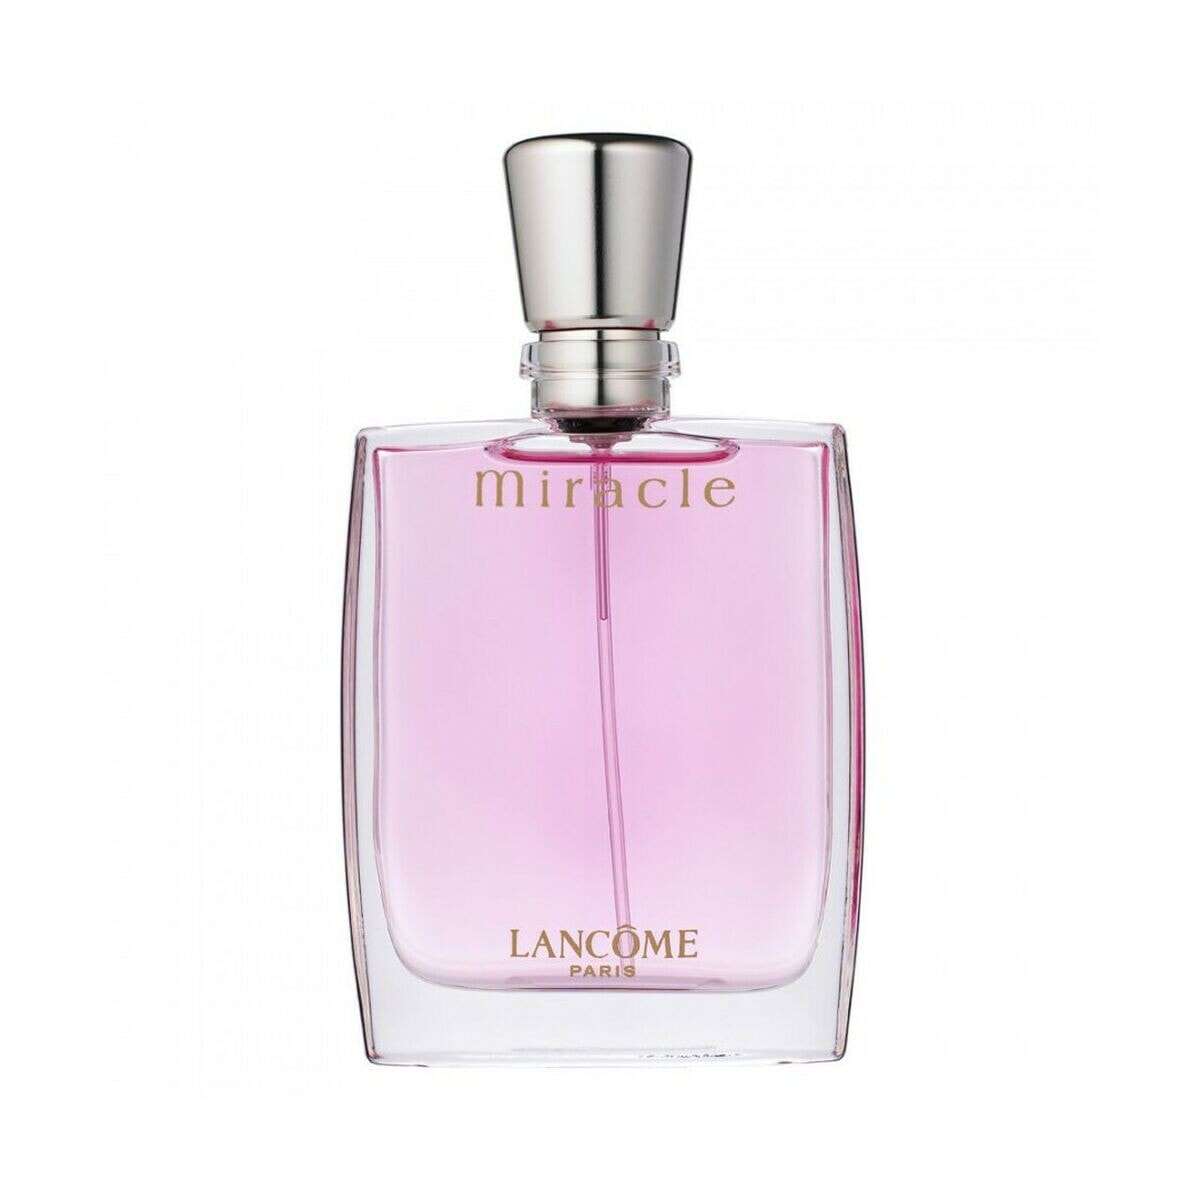 Women's Perfume Lancôme EDP Miracle 100 ml